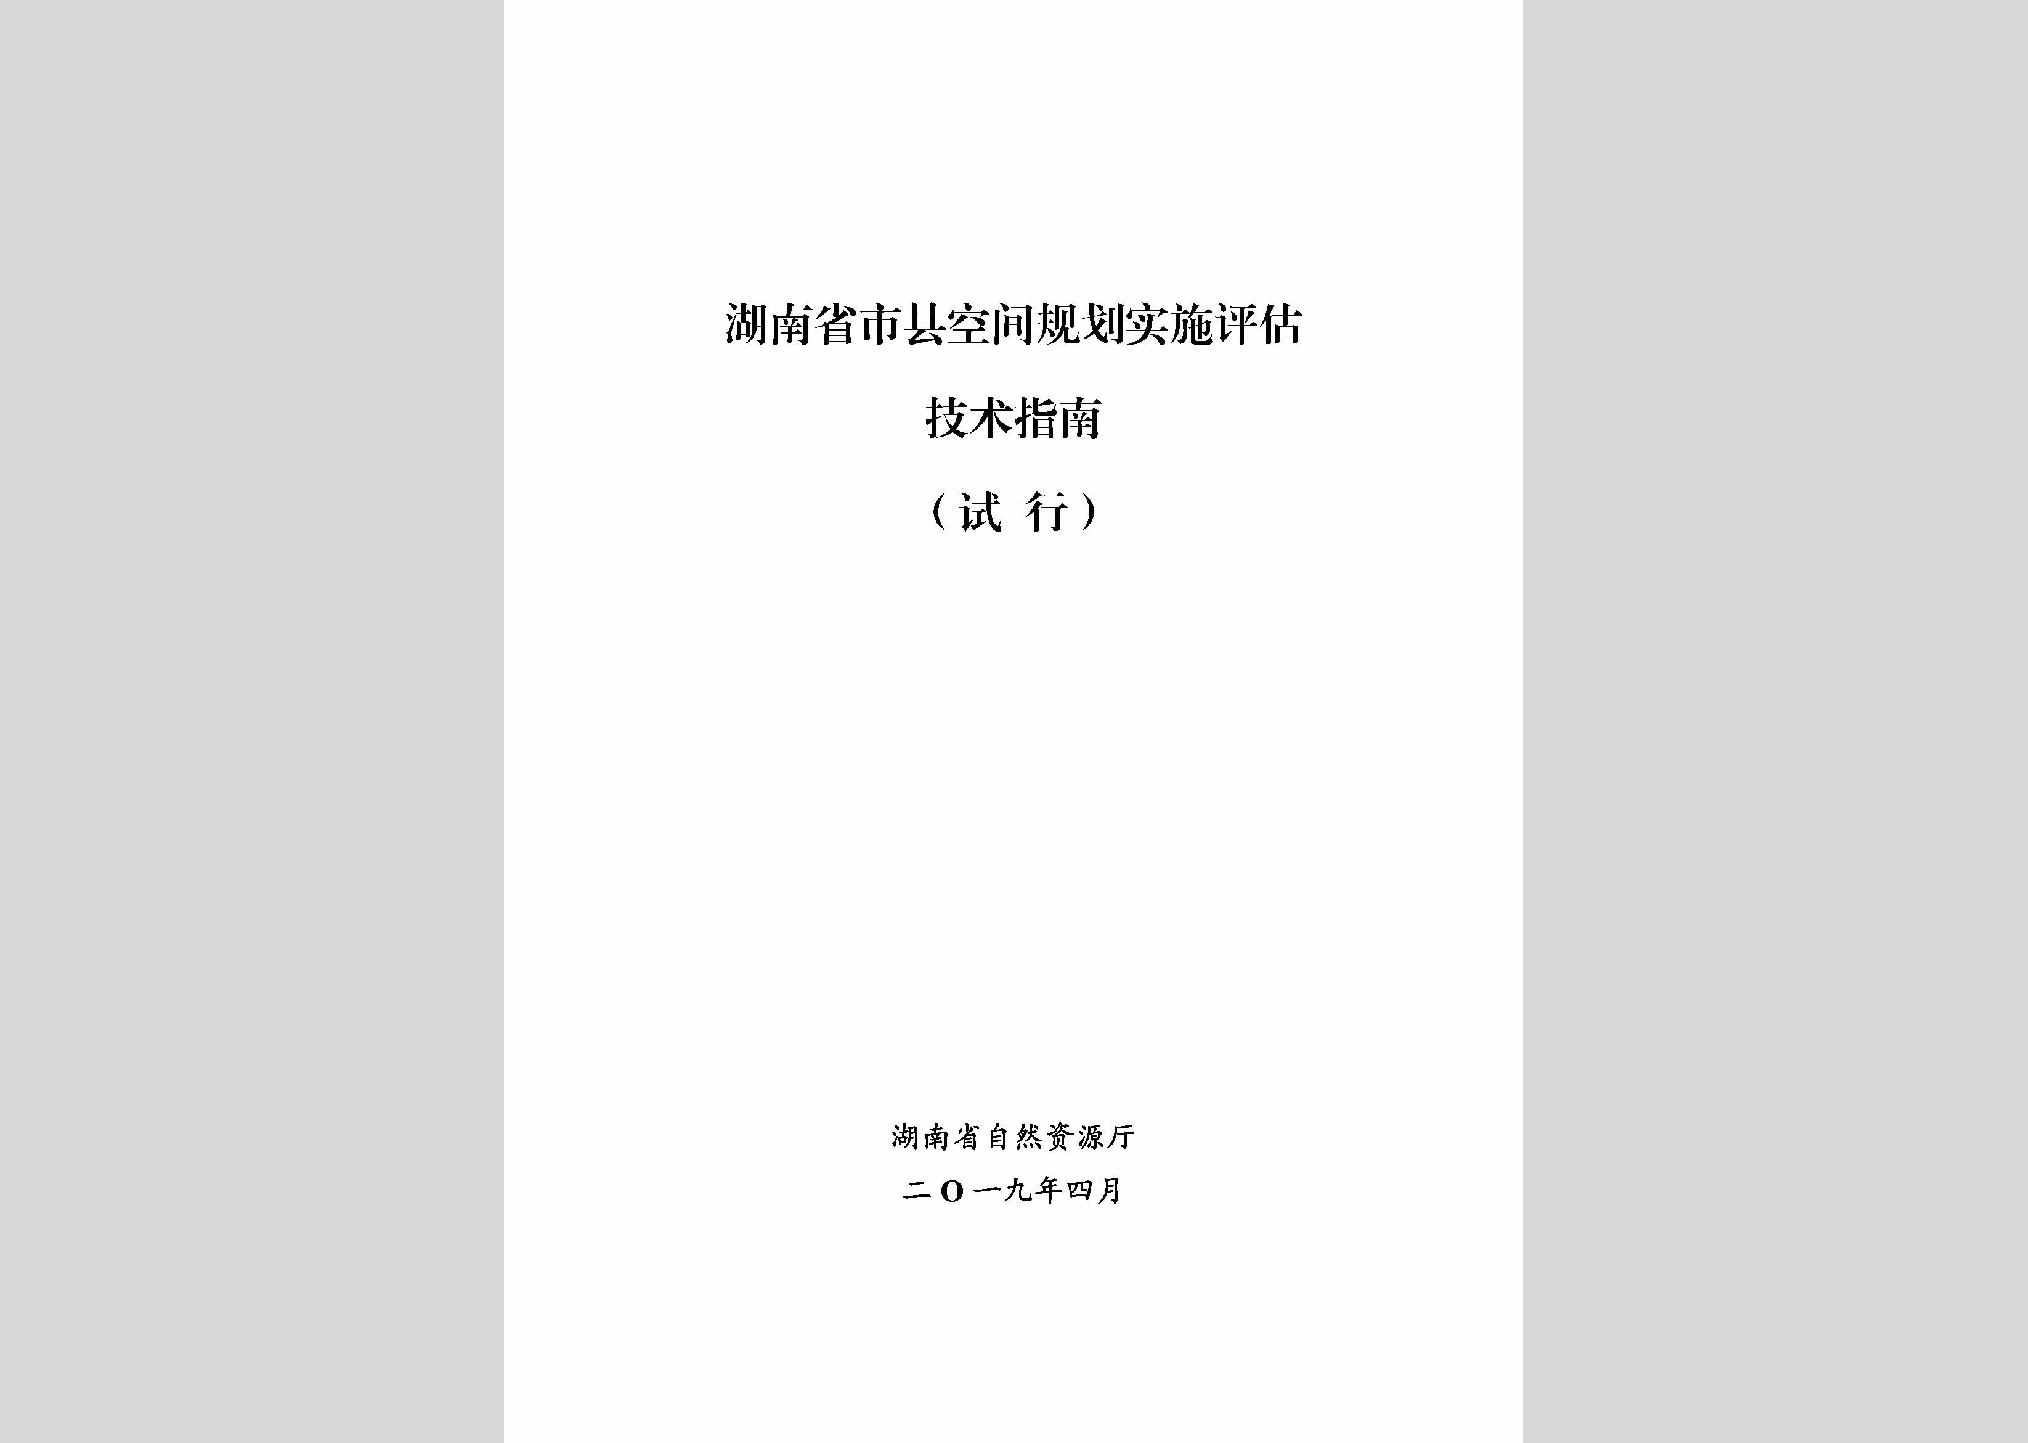 KJGHSSPG：湖南省市县空间规划实施评估技术指南（试行）